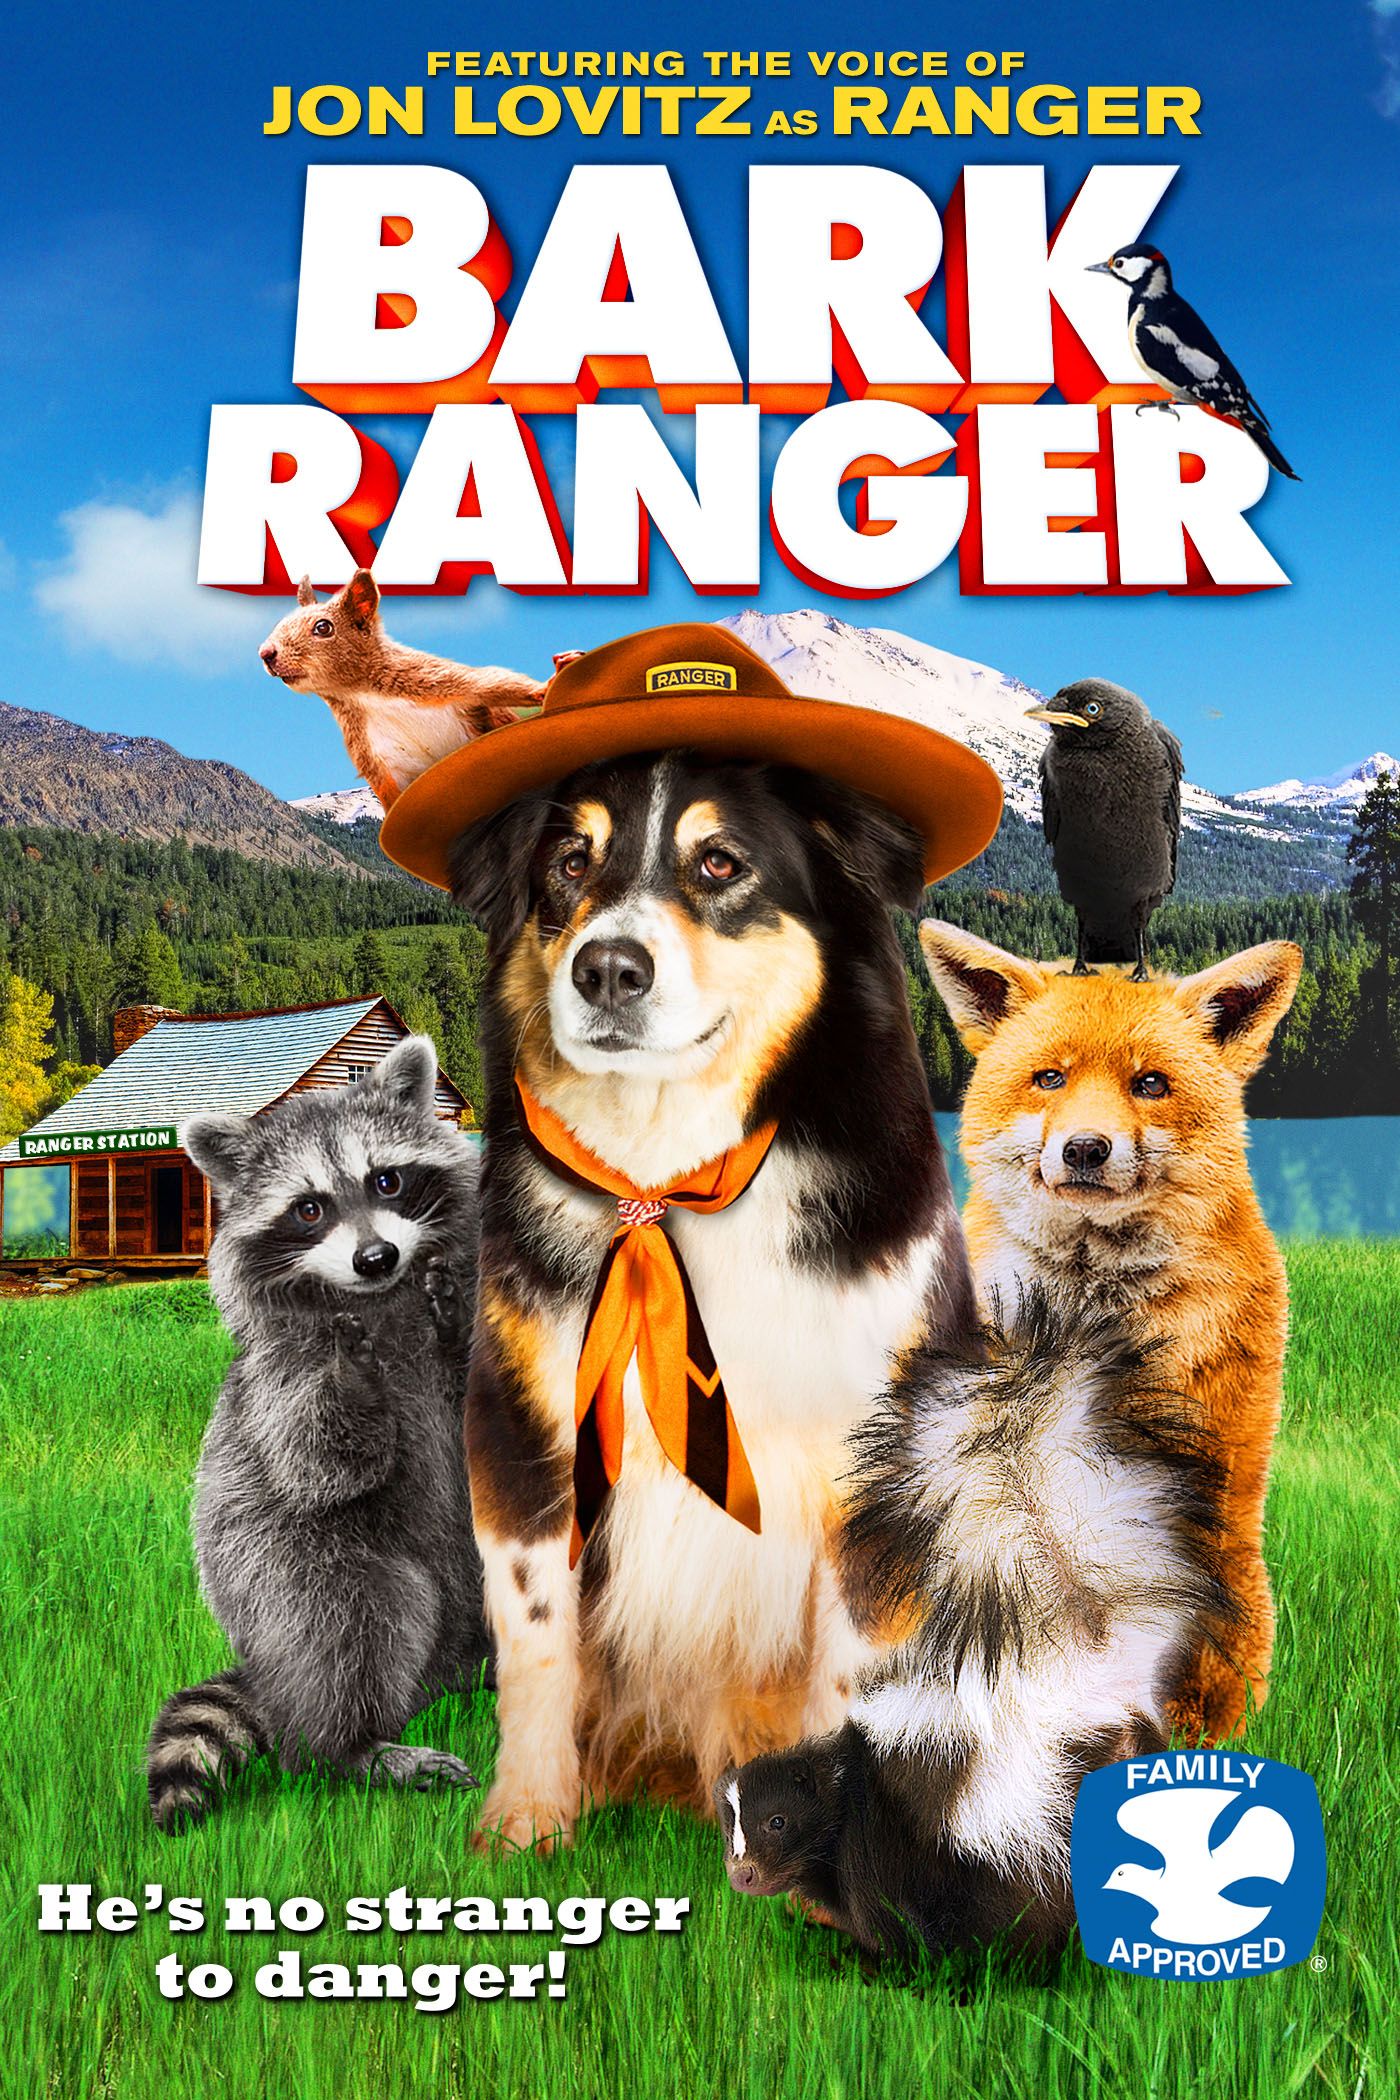 Bark Ranger (2015) Hindi Dubbed HDRip download full movie